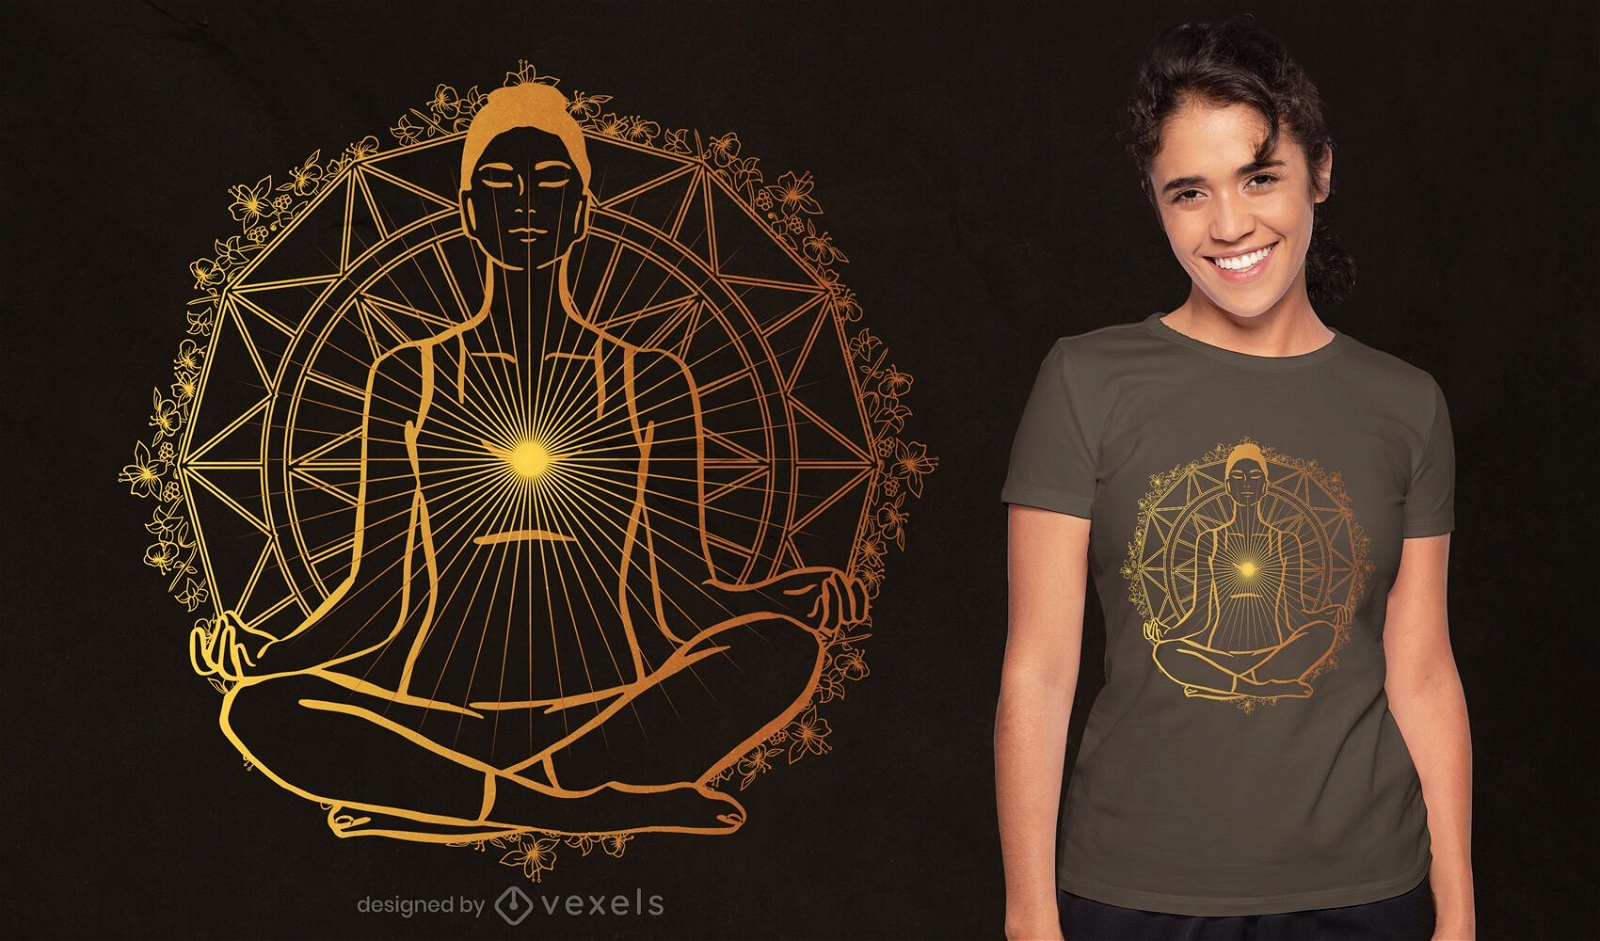 Enlightened spiritual t-shirt design